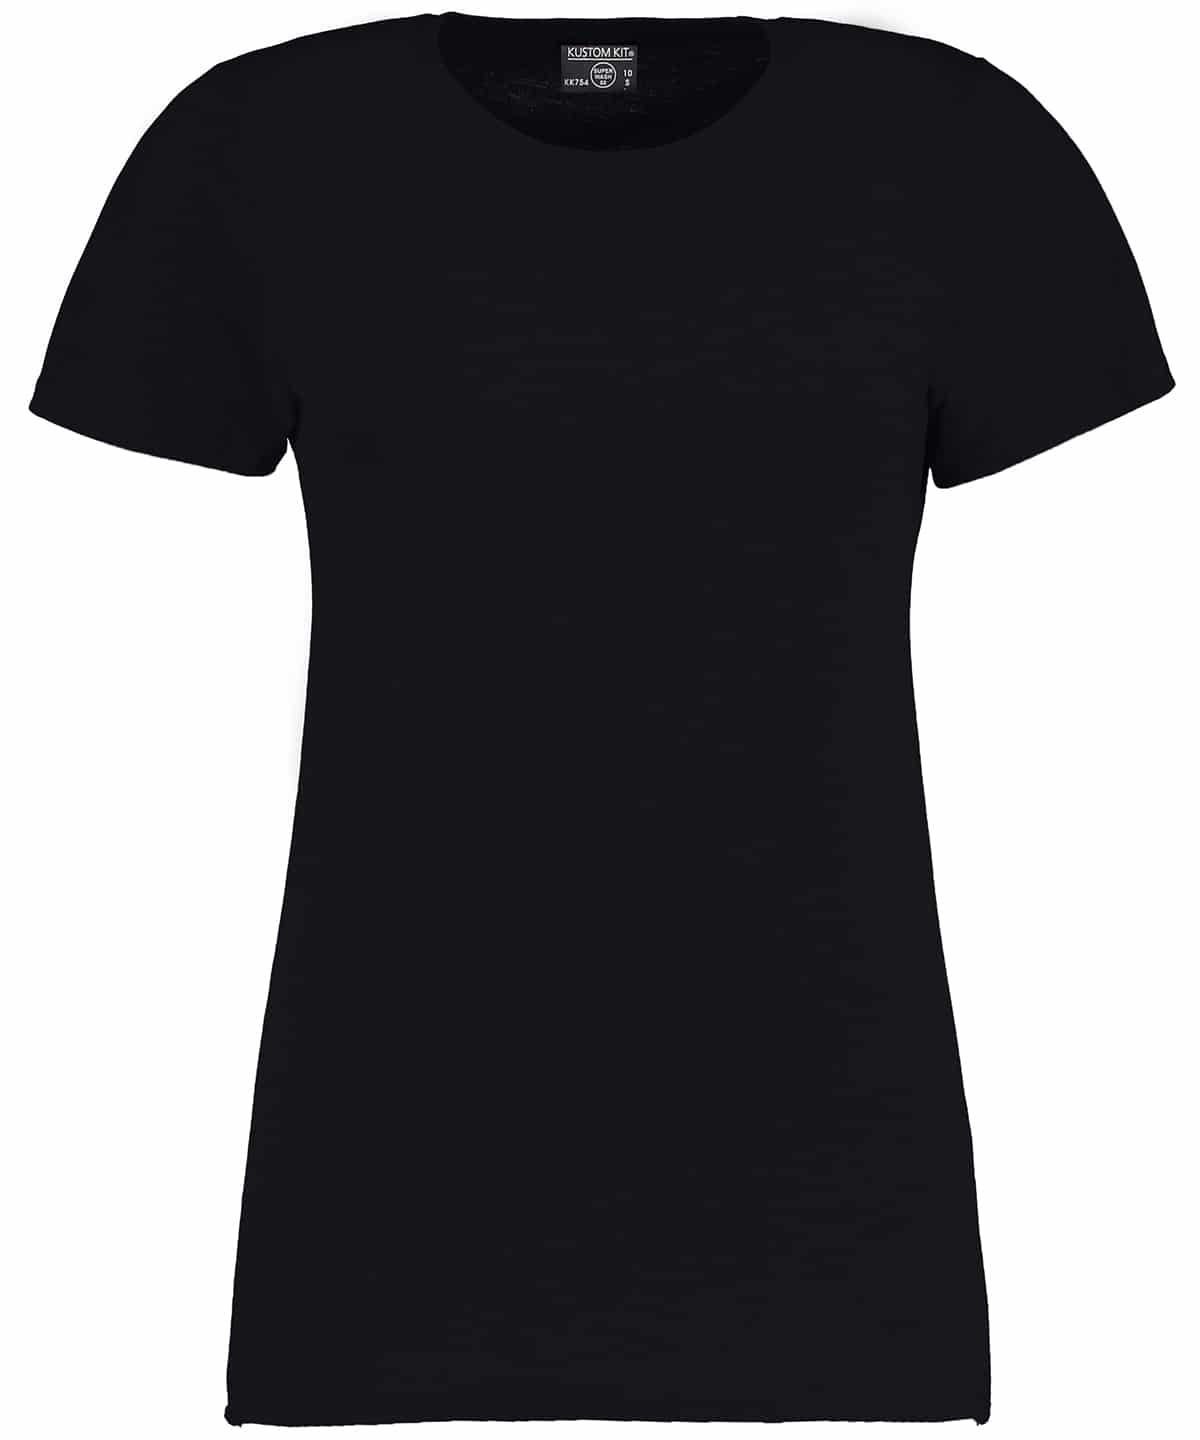 Kustom Kit Superwash T-shirt - Ladies Fit